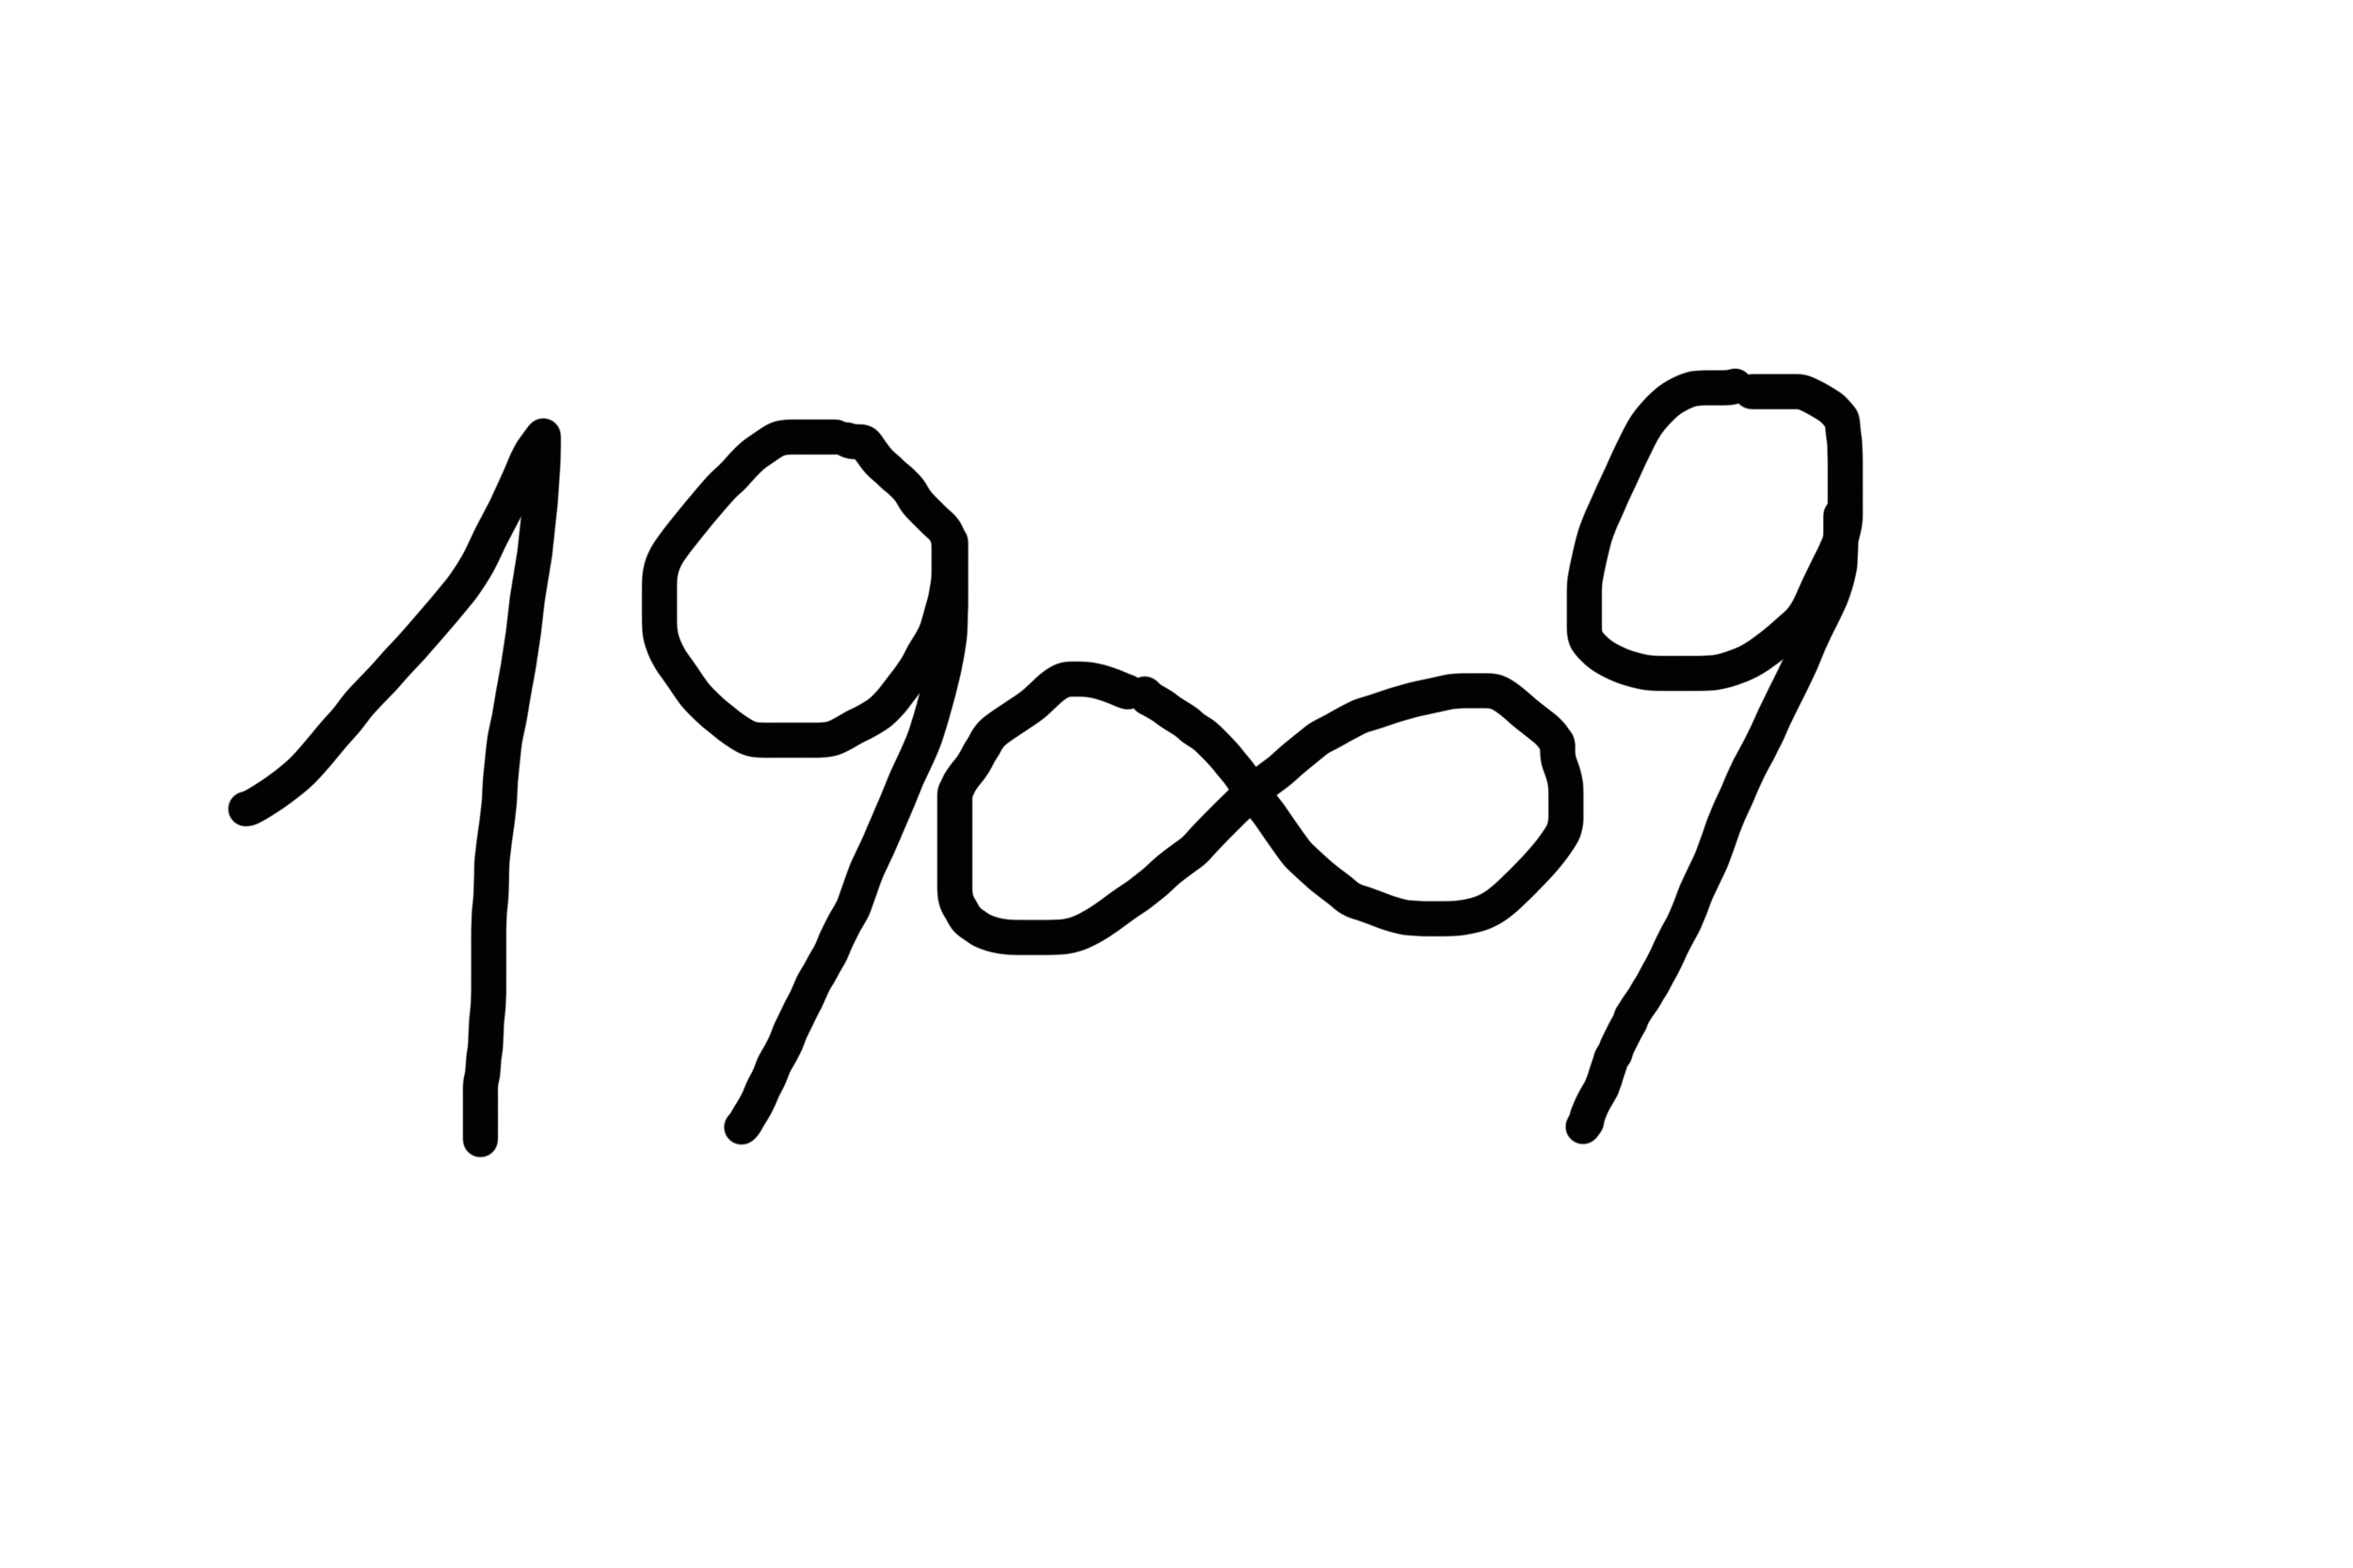 1989 drawing.jpg